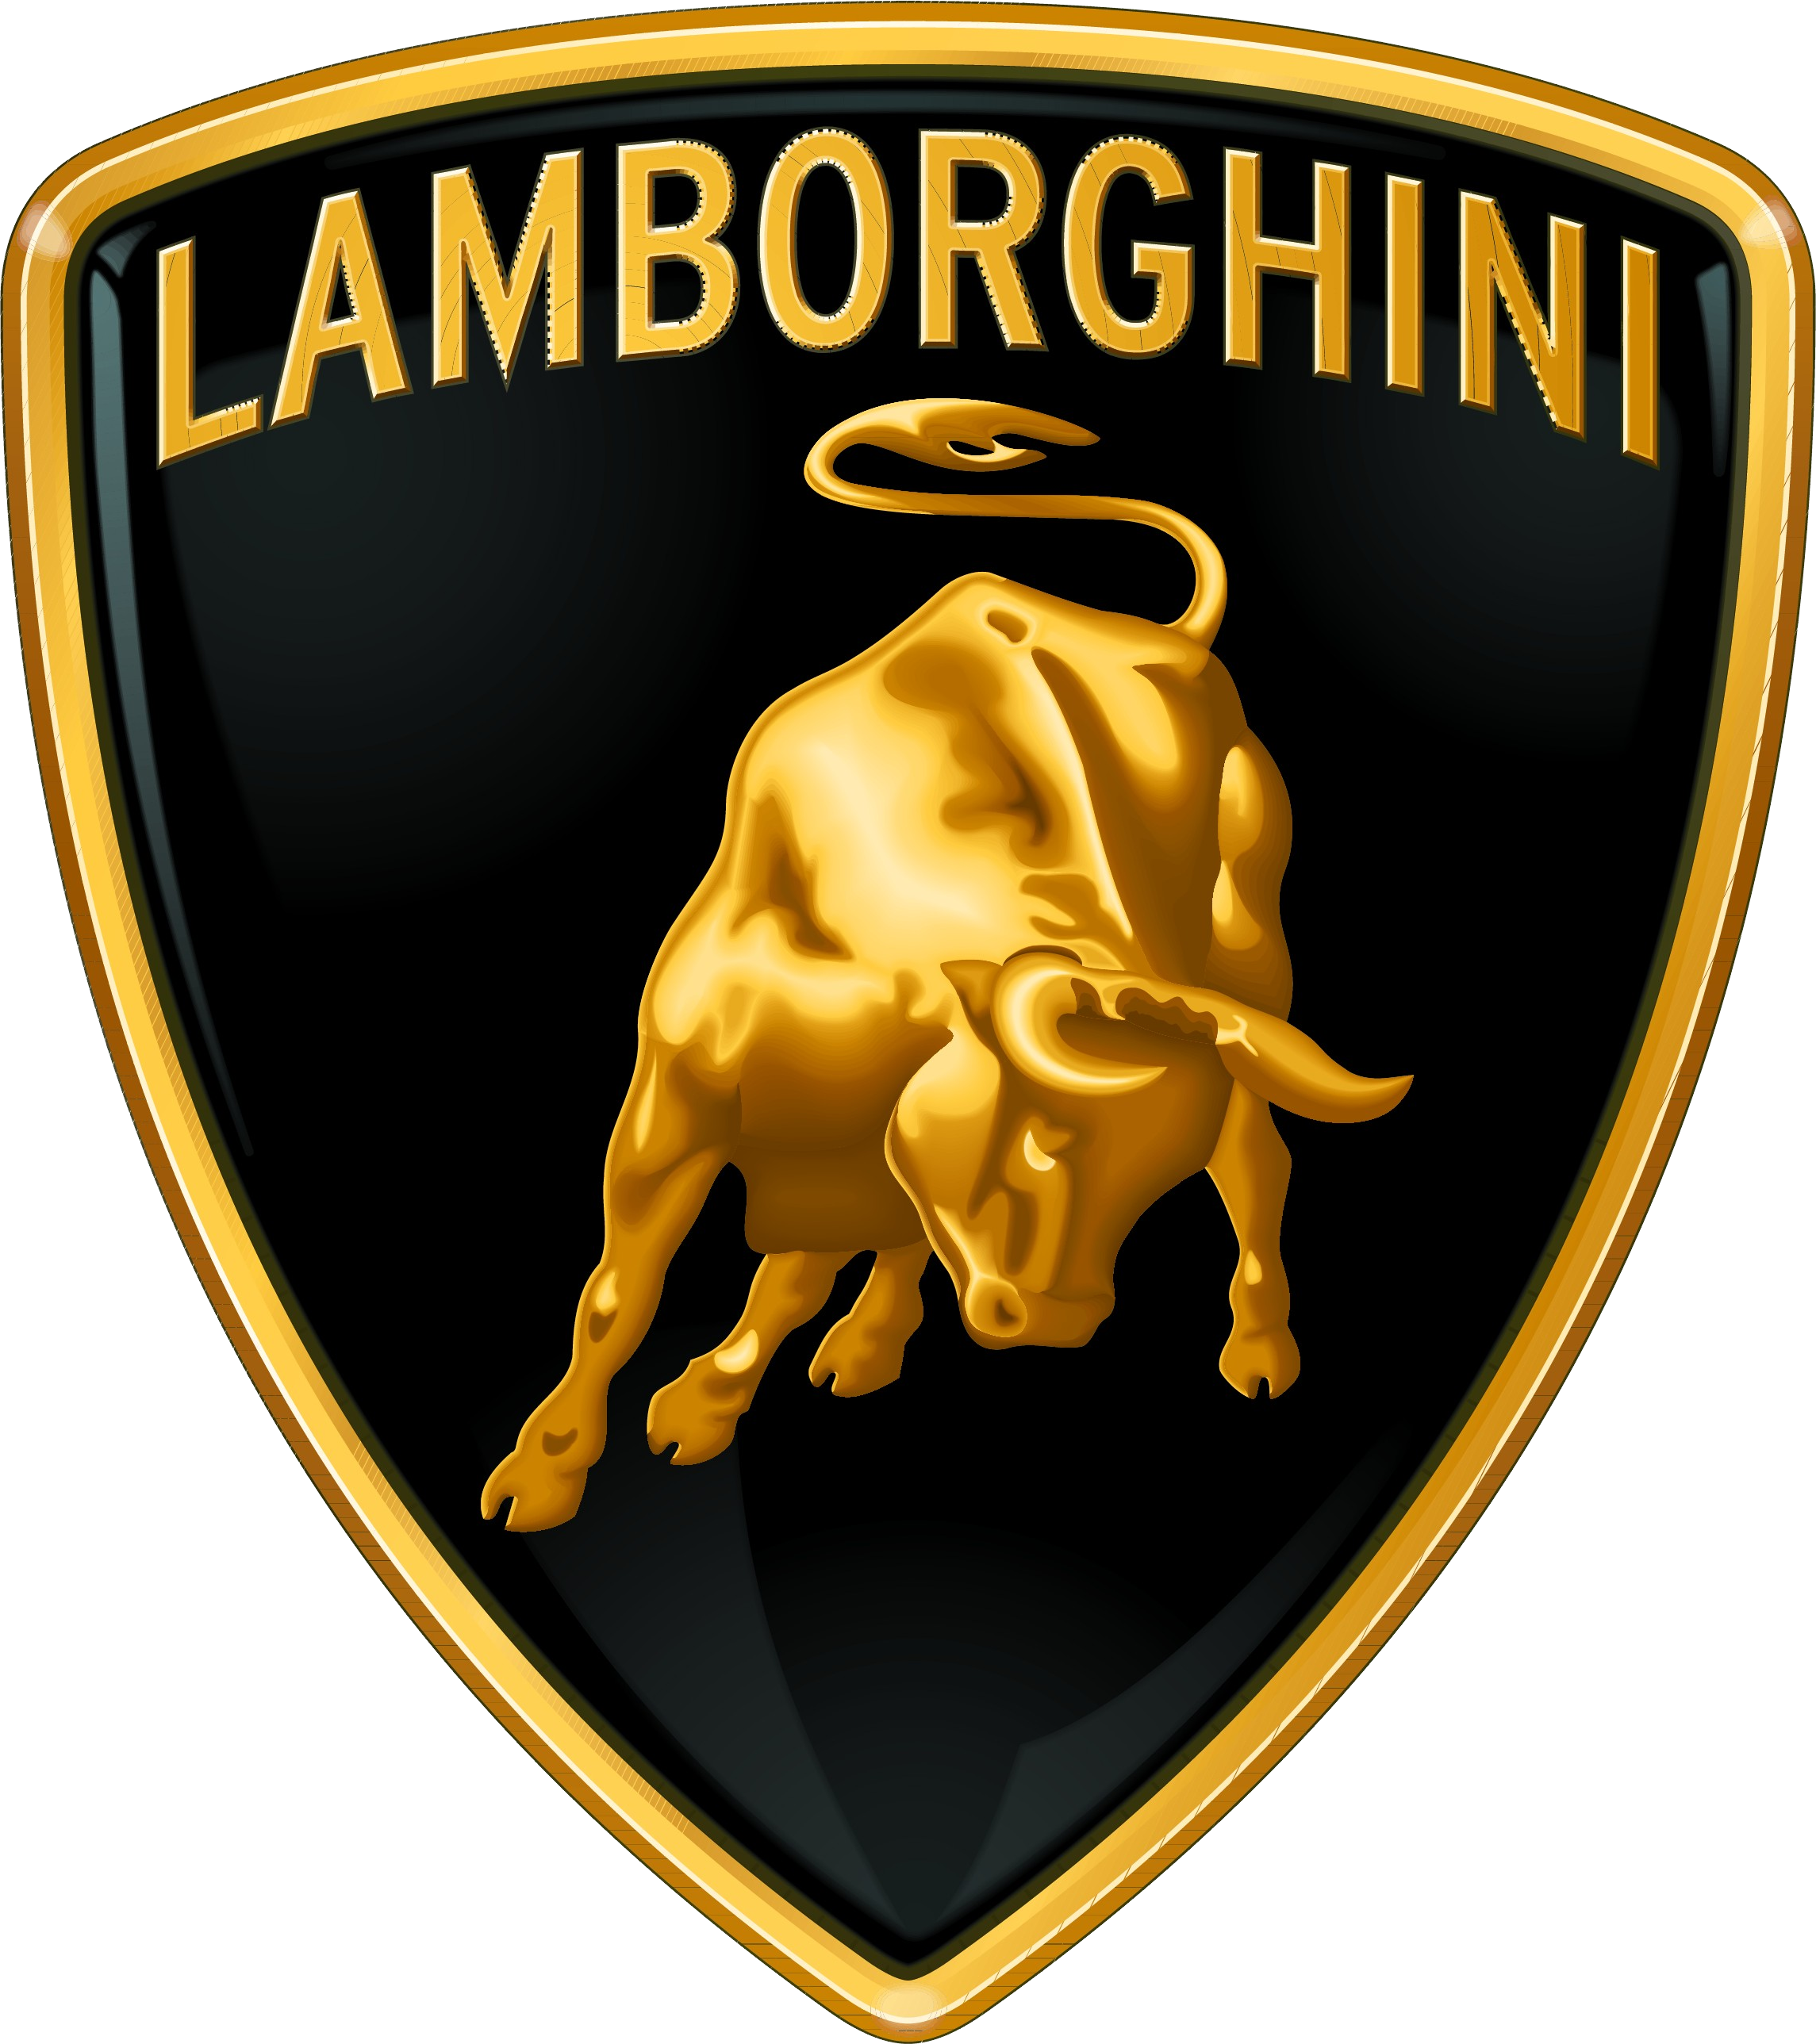 Lamborghini logo PNG image